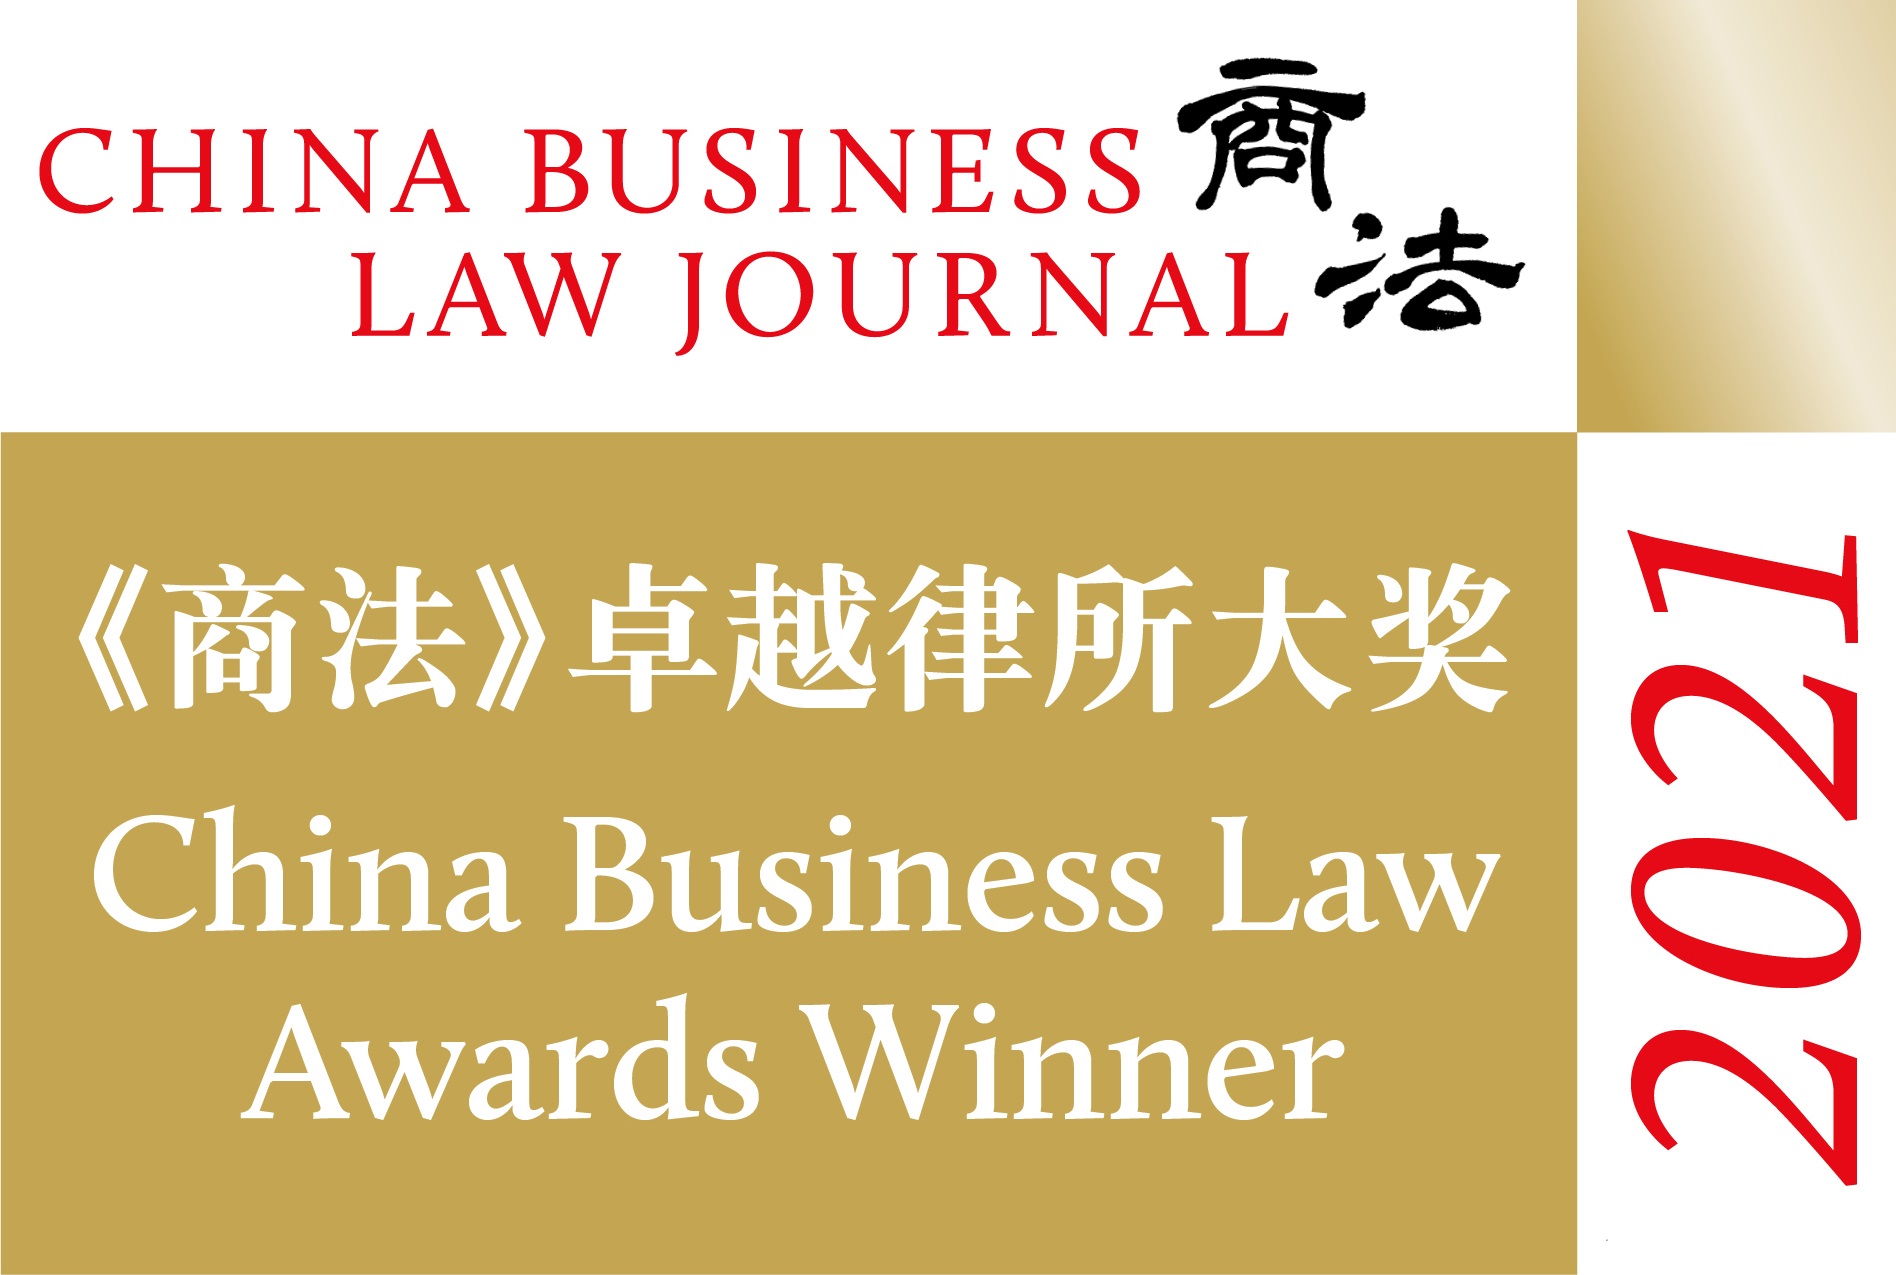 CBLJ China Business Law Firm, 2021